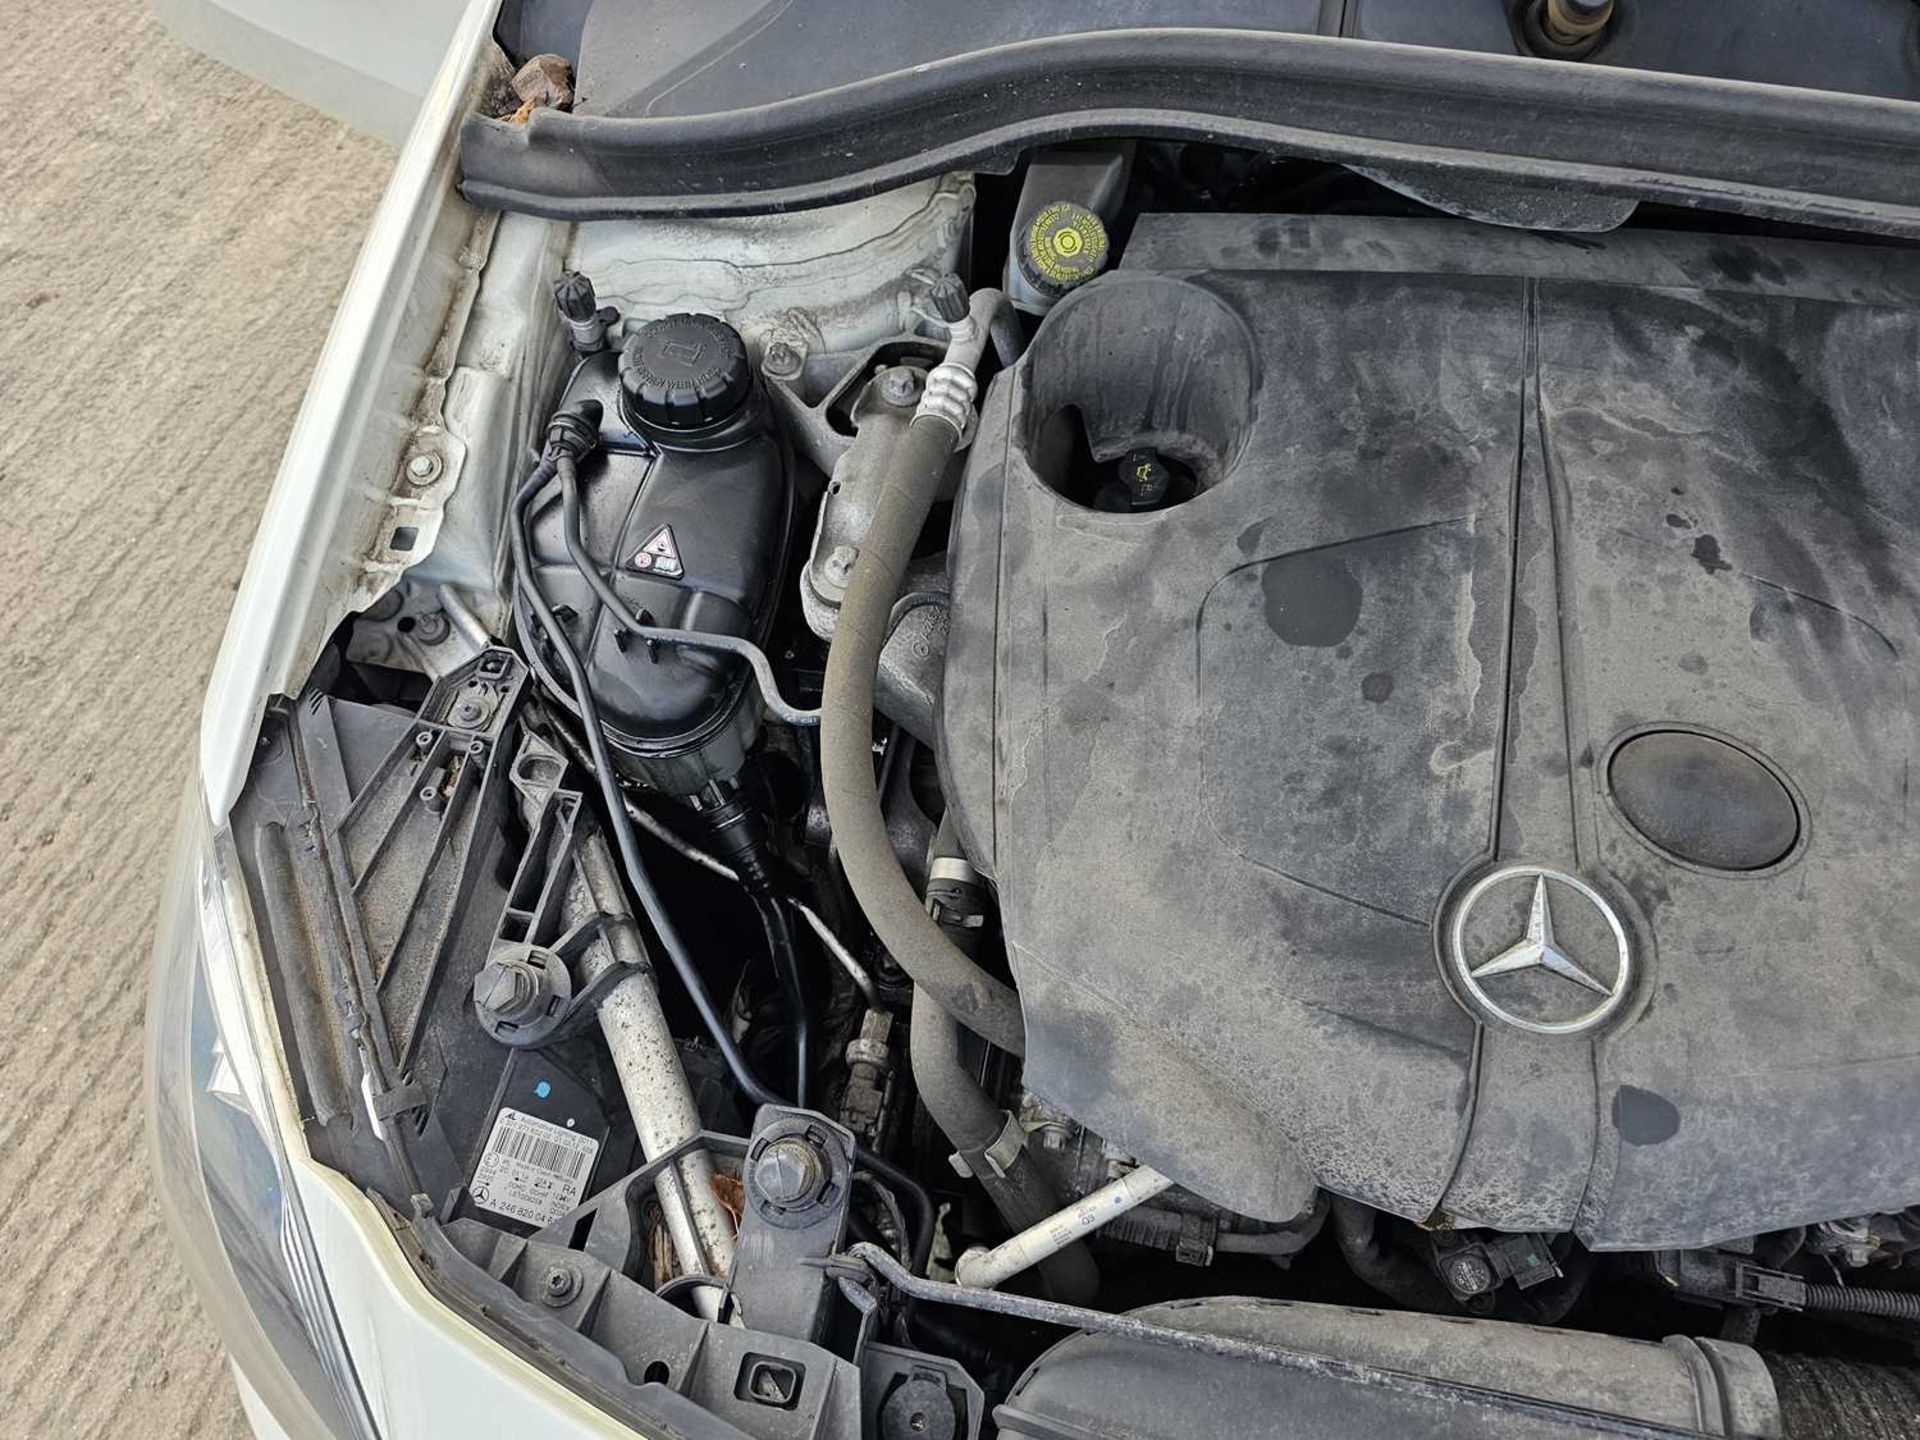 2012 Mercedes B180 CDi, 6 Speed, Parking Sensors, Bluetooth, Cruise Control, A/C (Reg. Docs. Availab - Image 13 of 28